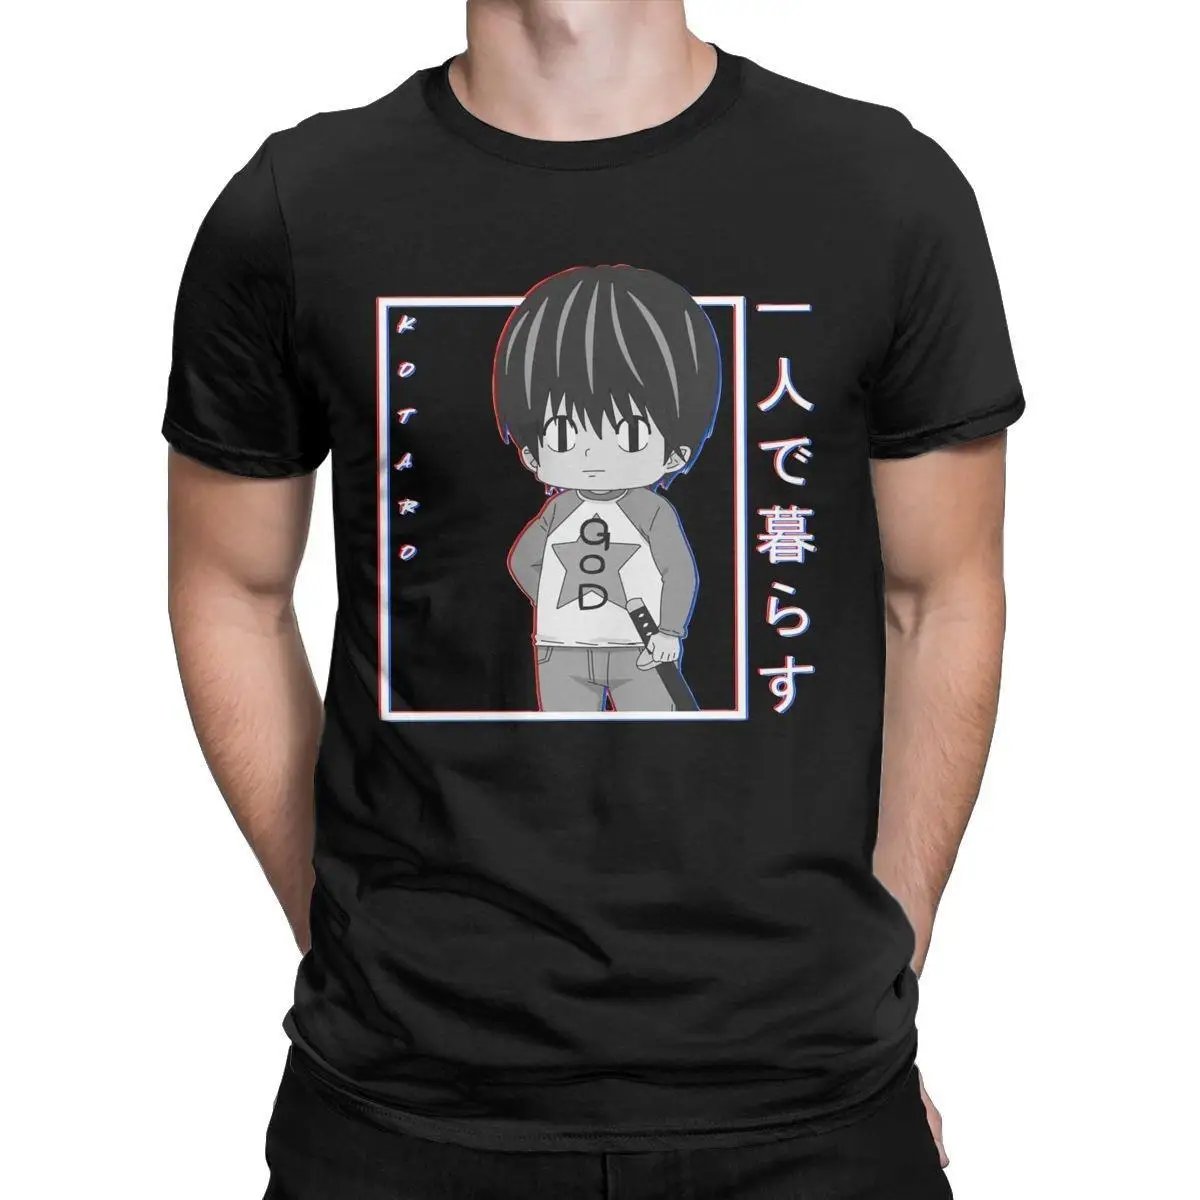 Kotaro Lives Alone Anime Men T Shirts Hipster Tee Shirt Short Sleeve O Neck T-Shirt 100% Cotton Plus Size Tops